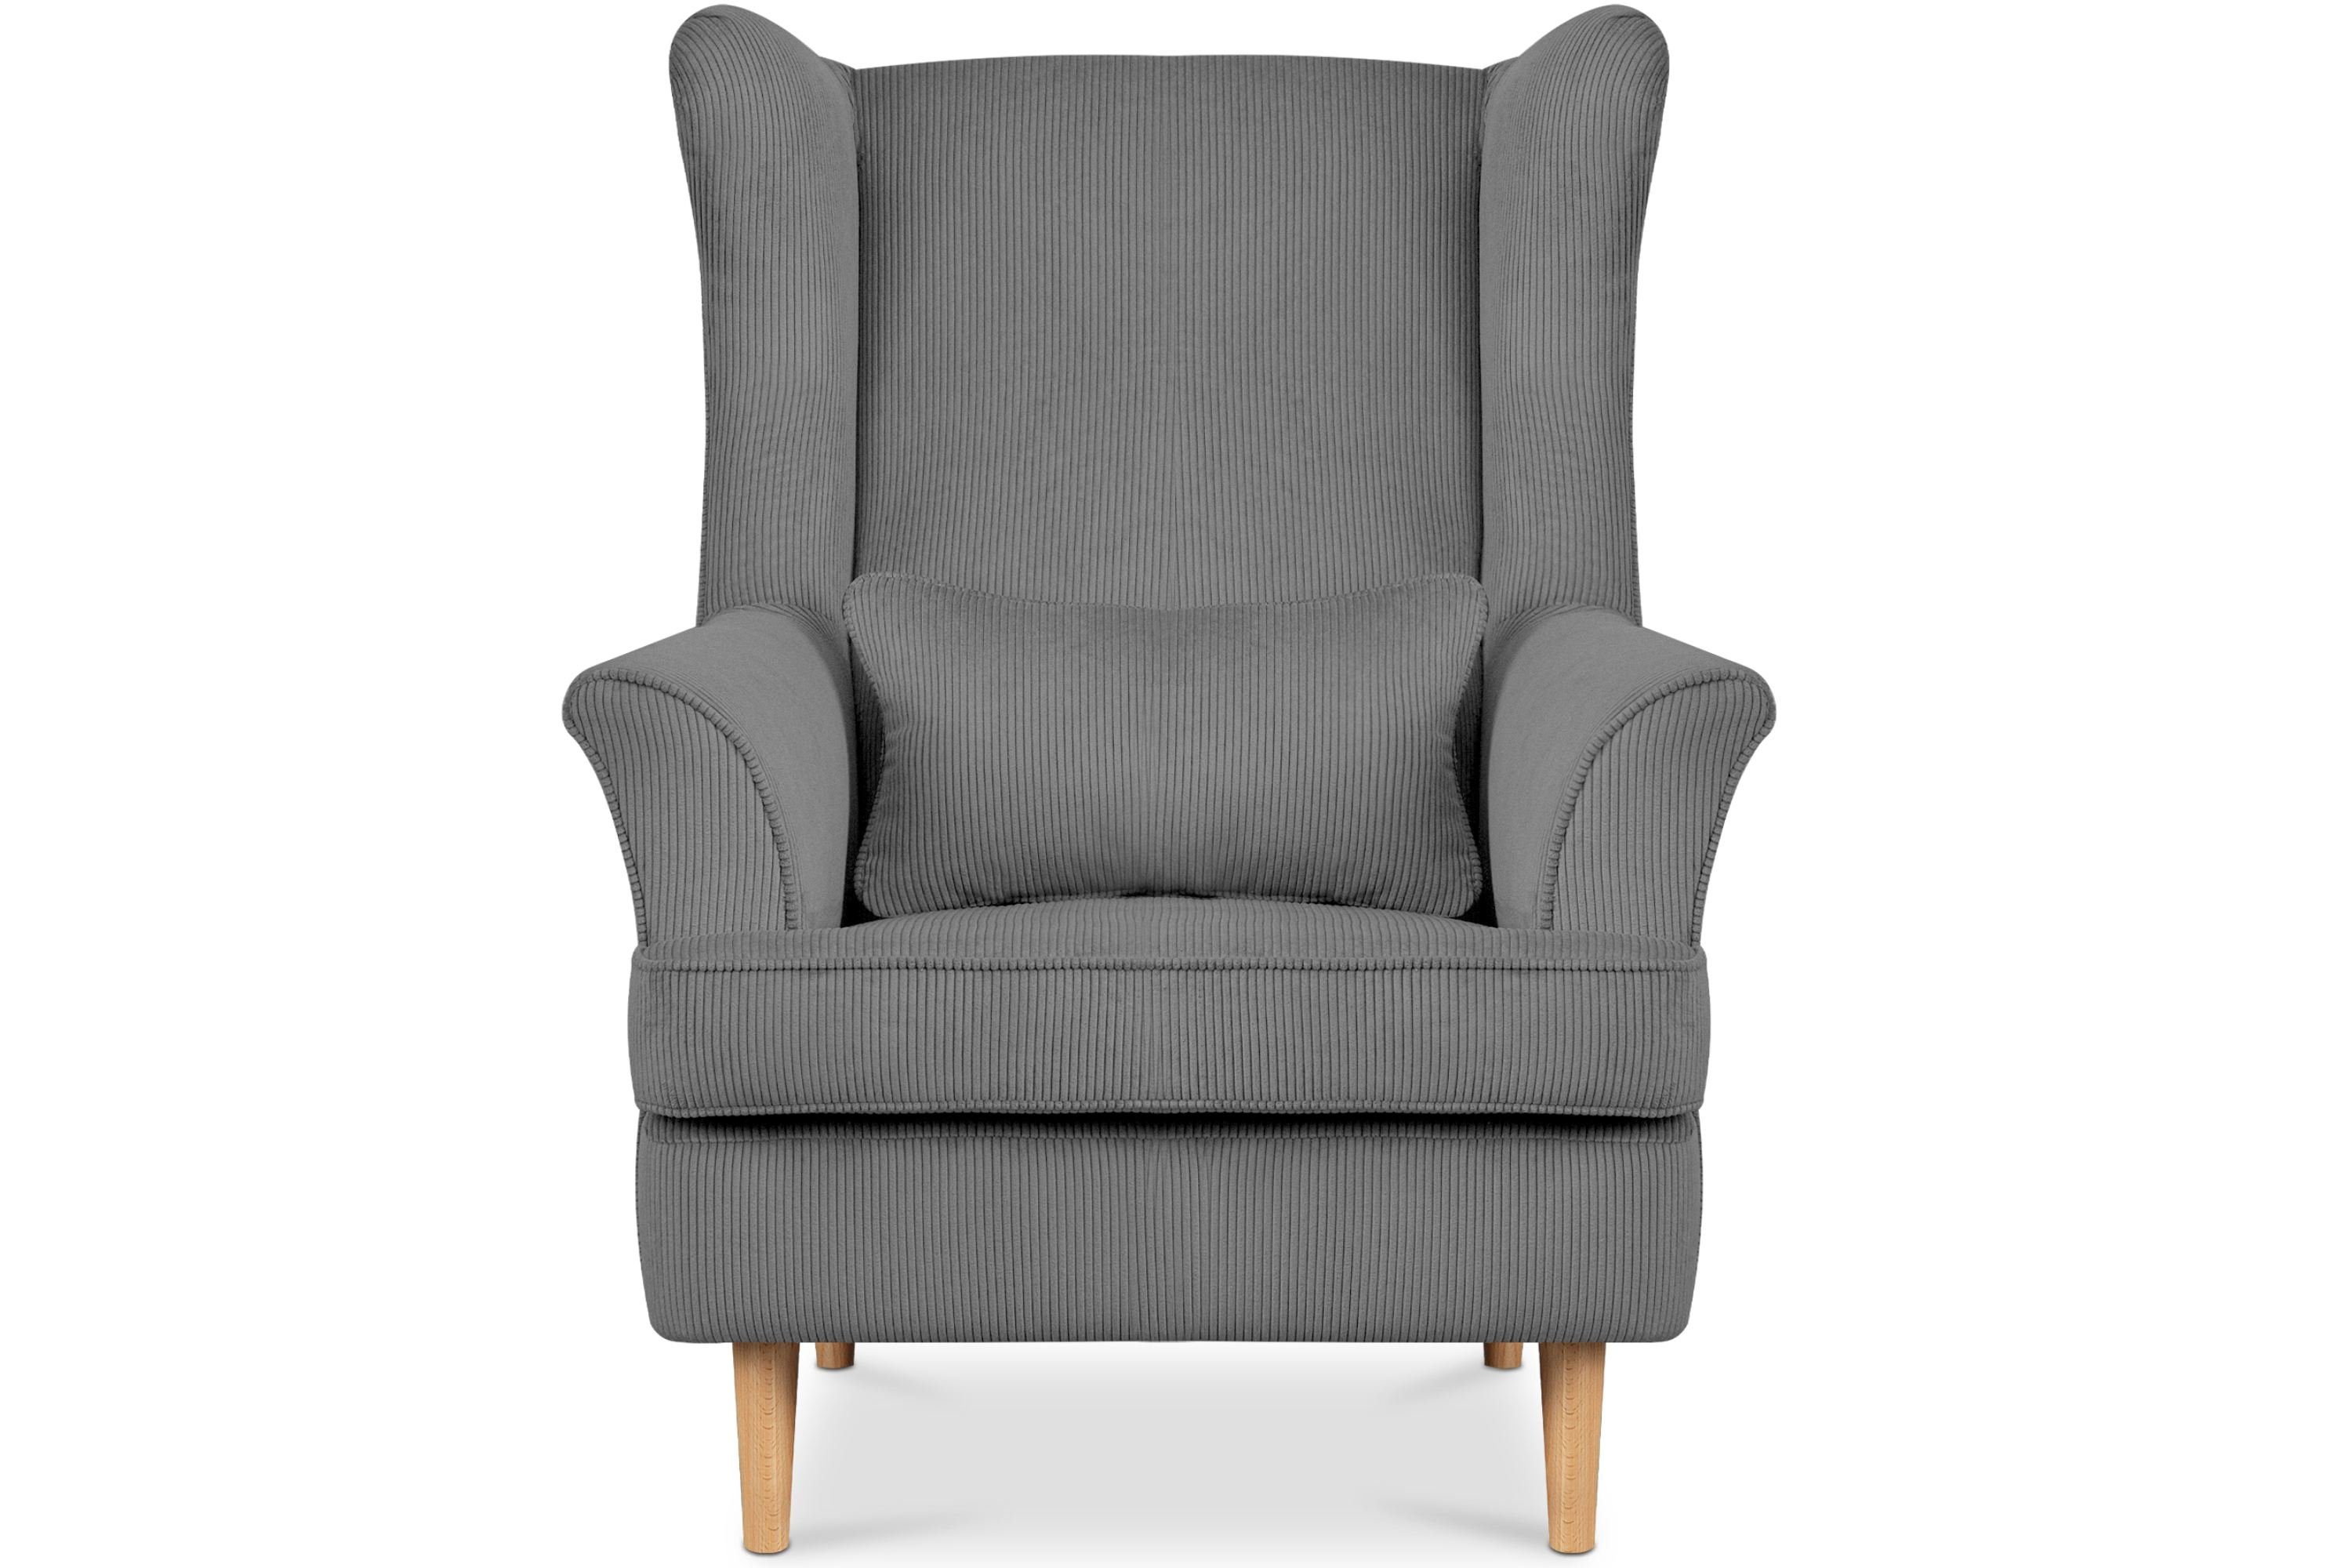 Konsimo Ohrensessel Sessel, dekorativem zeitloses Füße, STRALIS Design, inklusive Kissen hohe